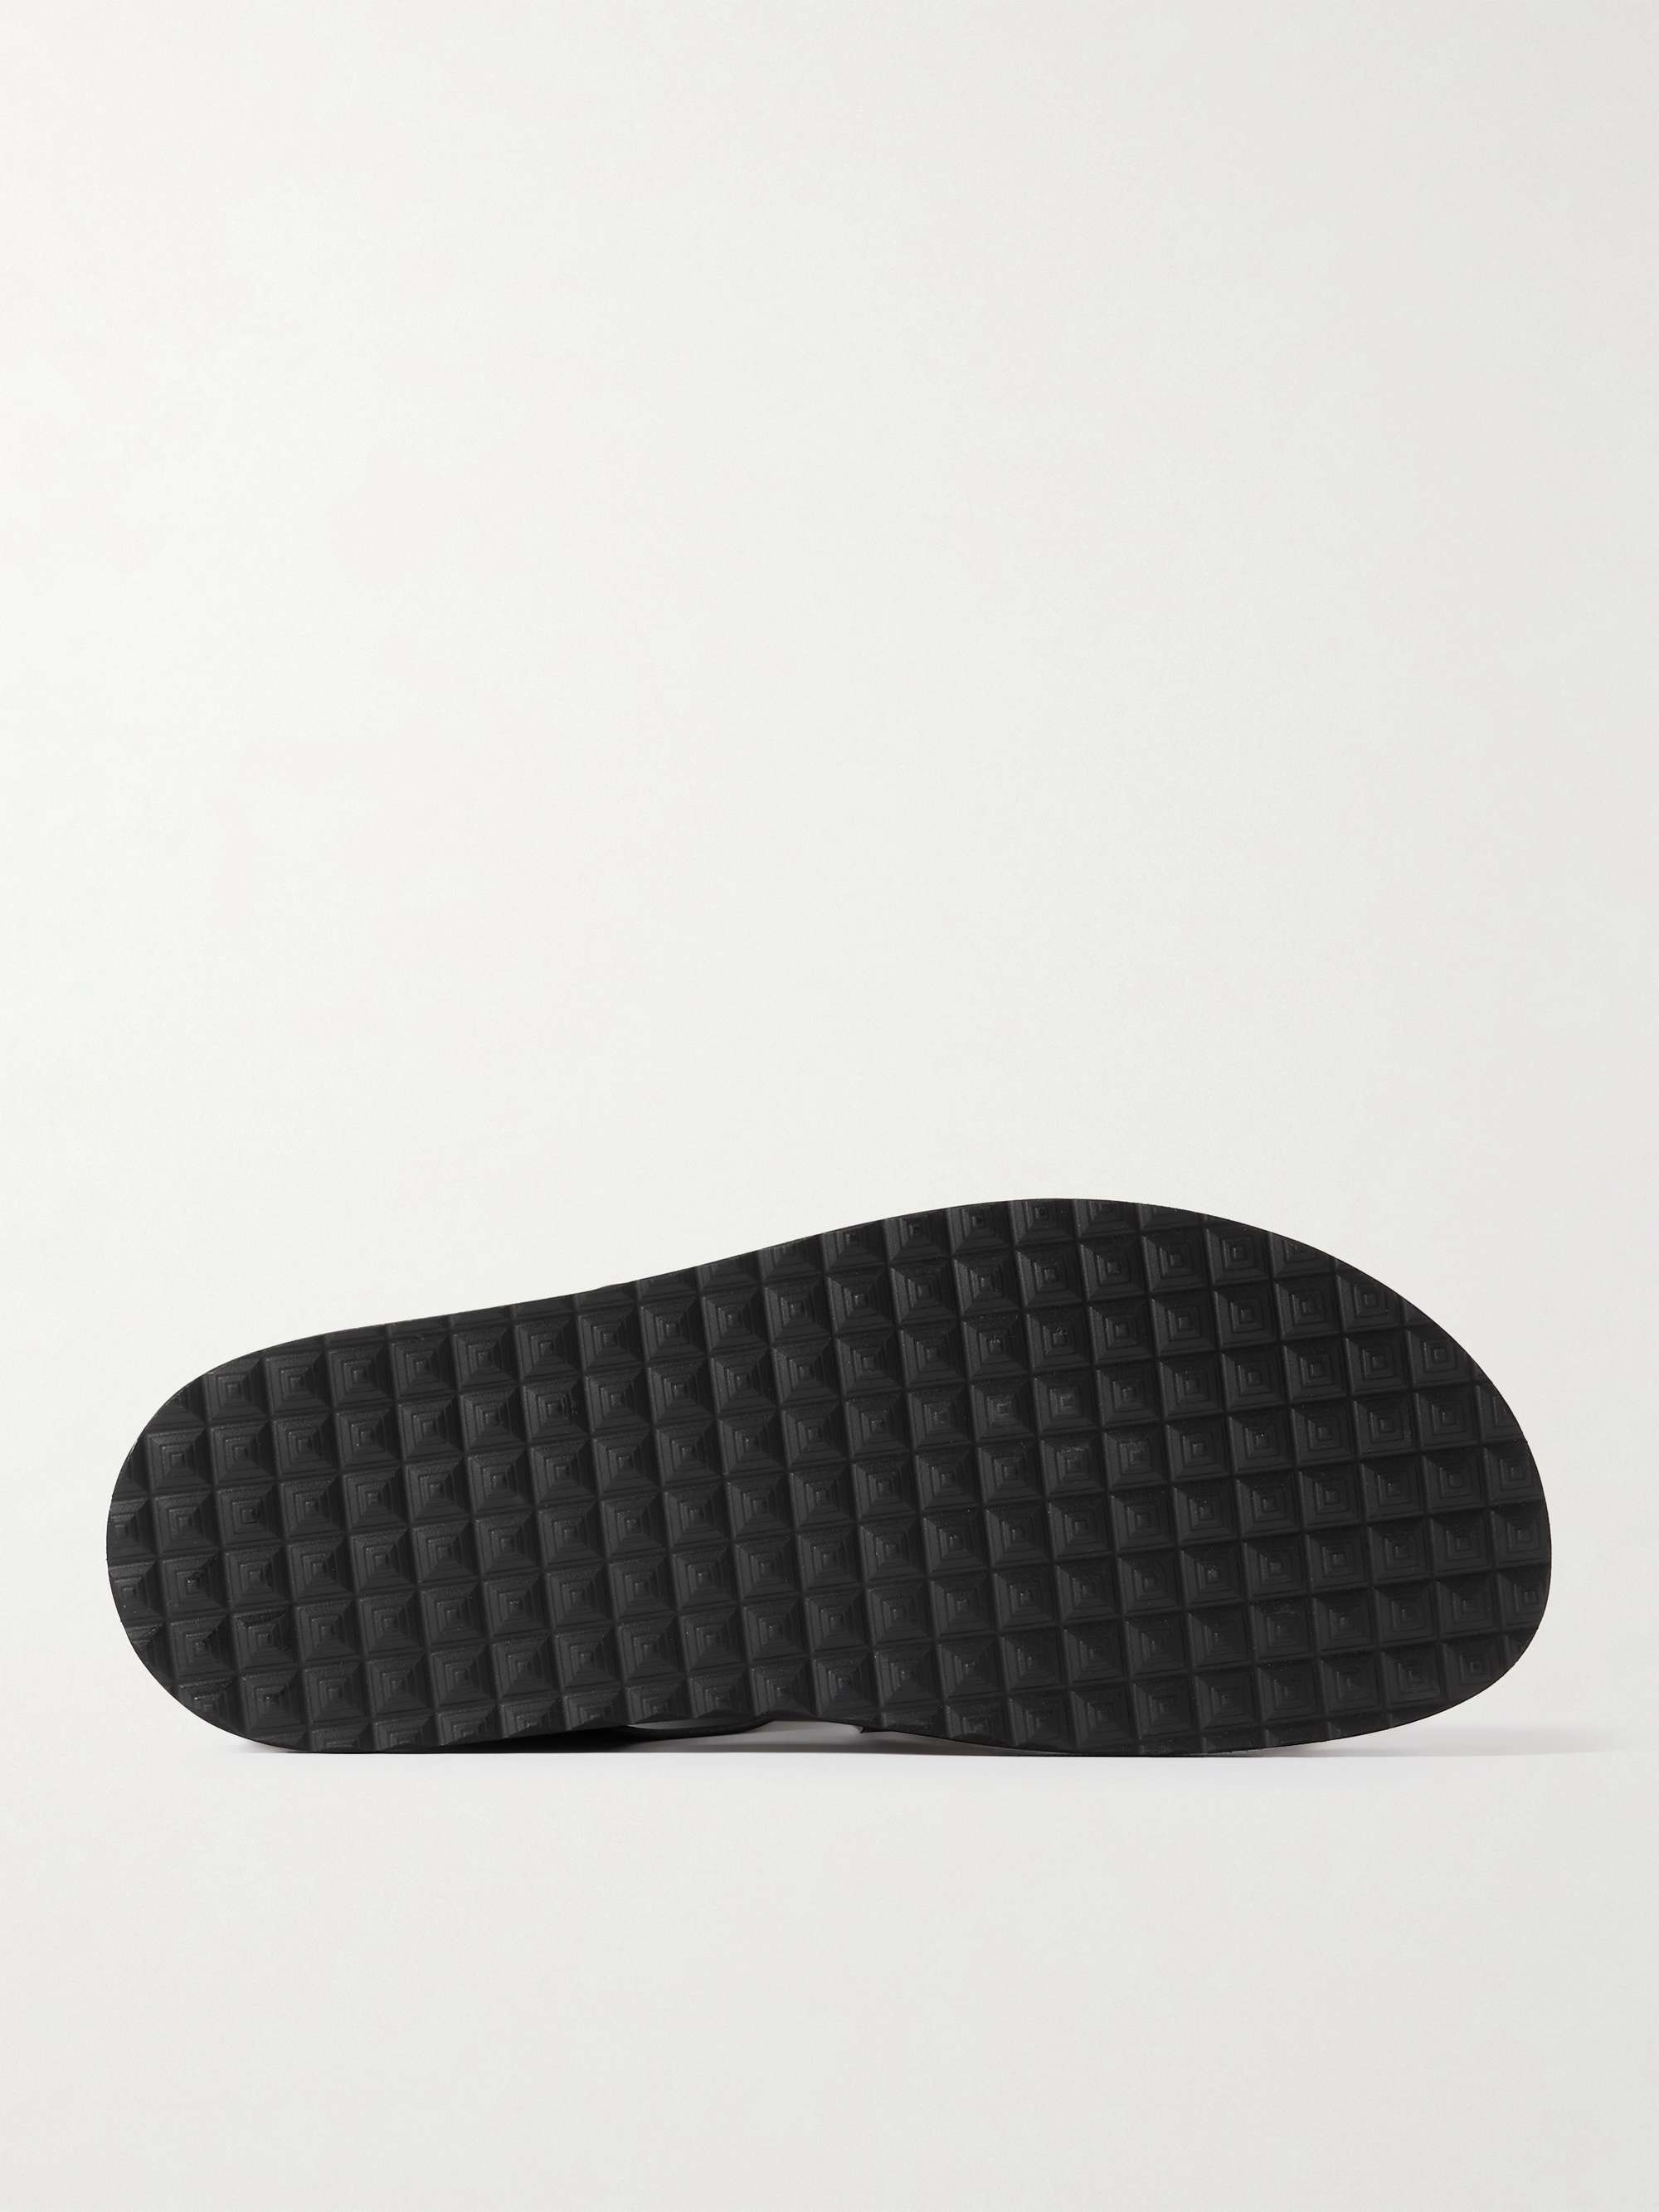 OFFICINE CREATIVE Charrat Leather Sandals for Men | MR PORTER